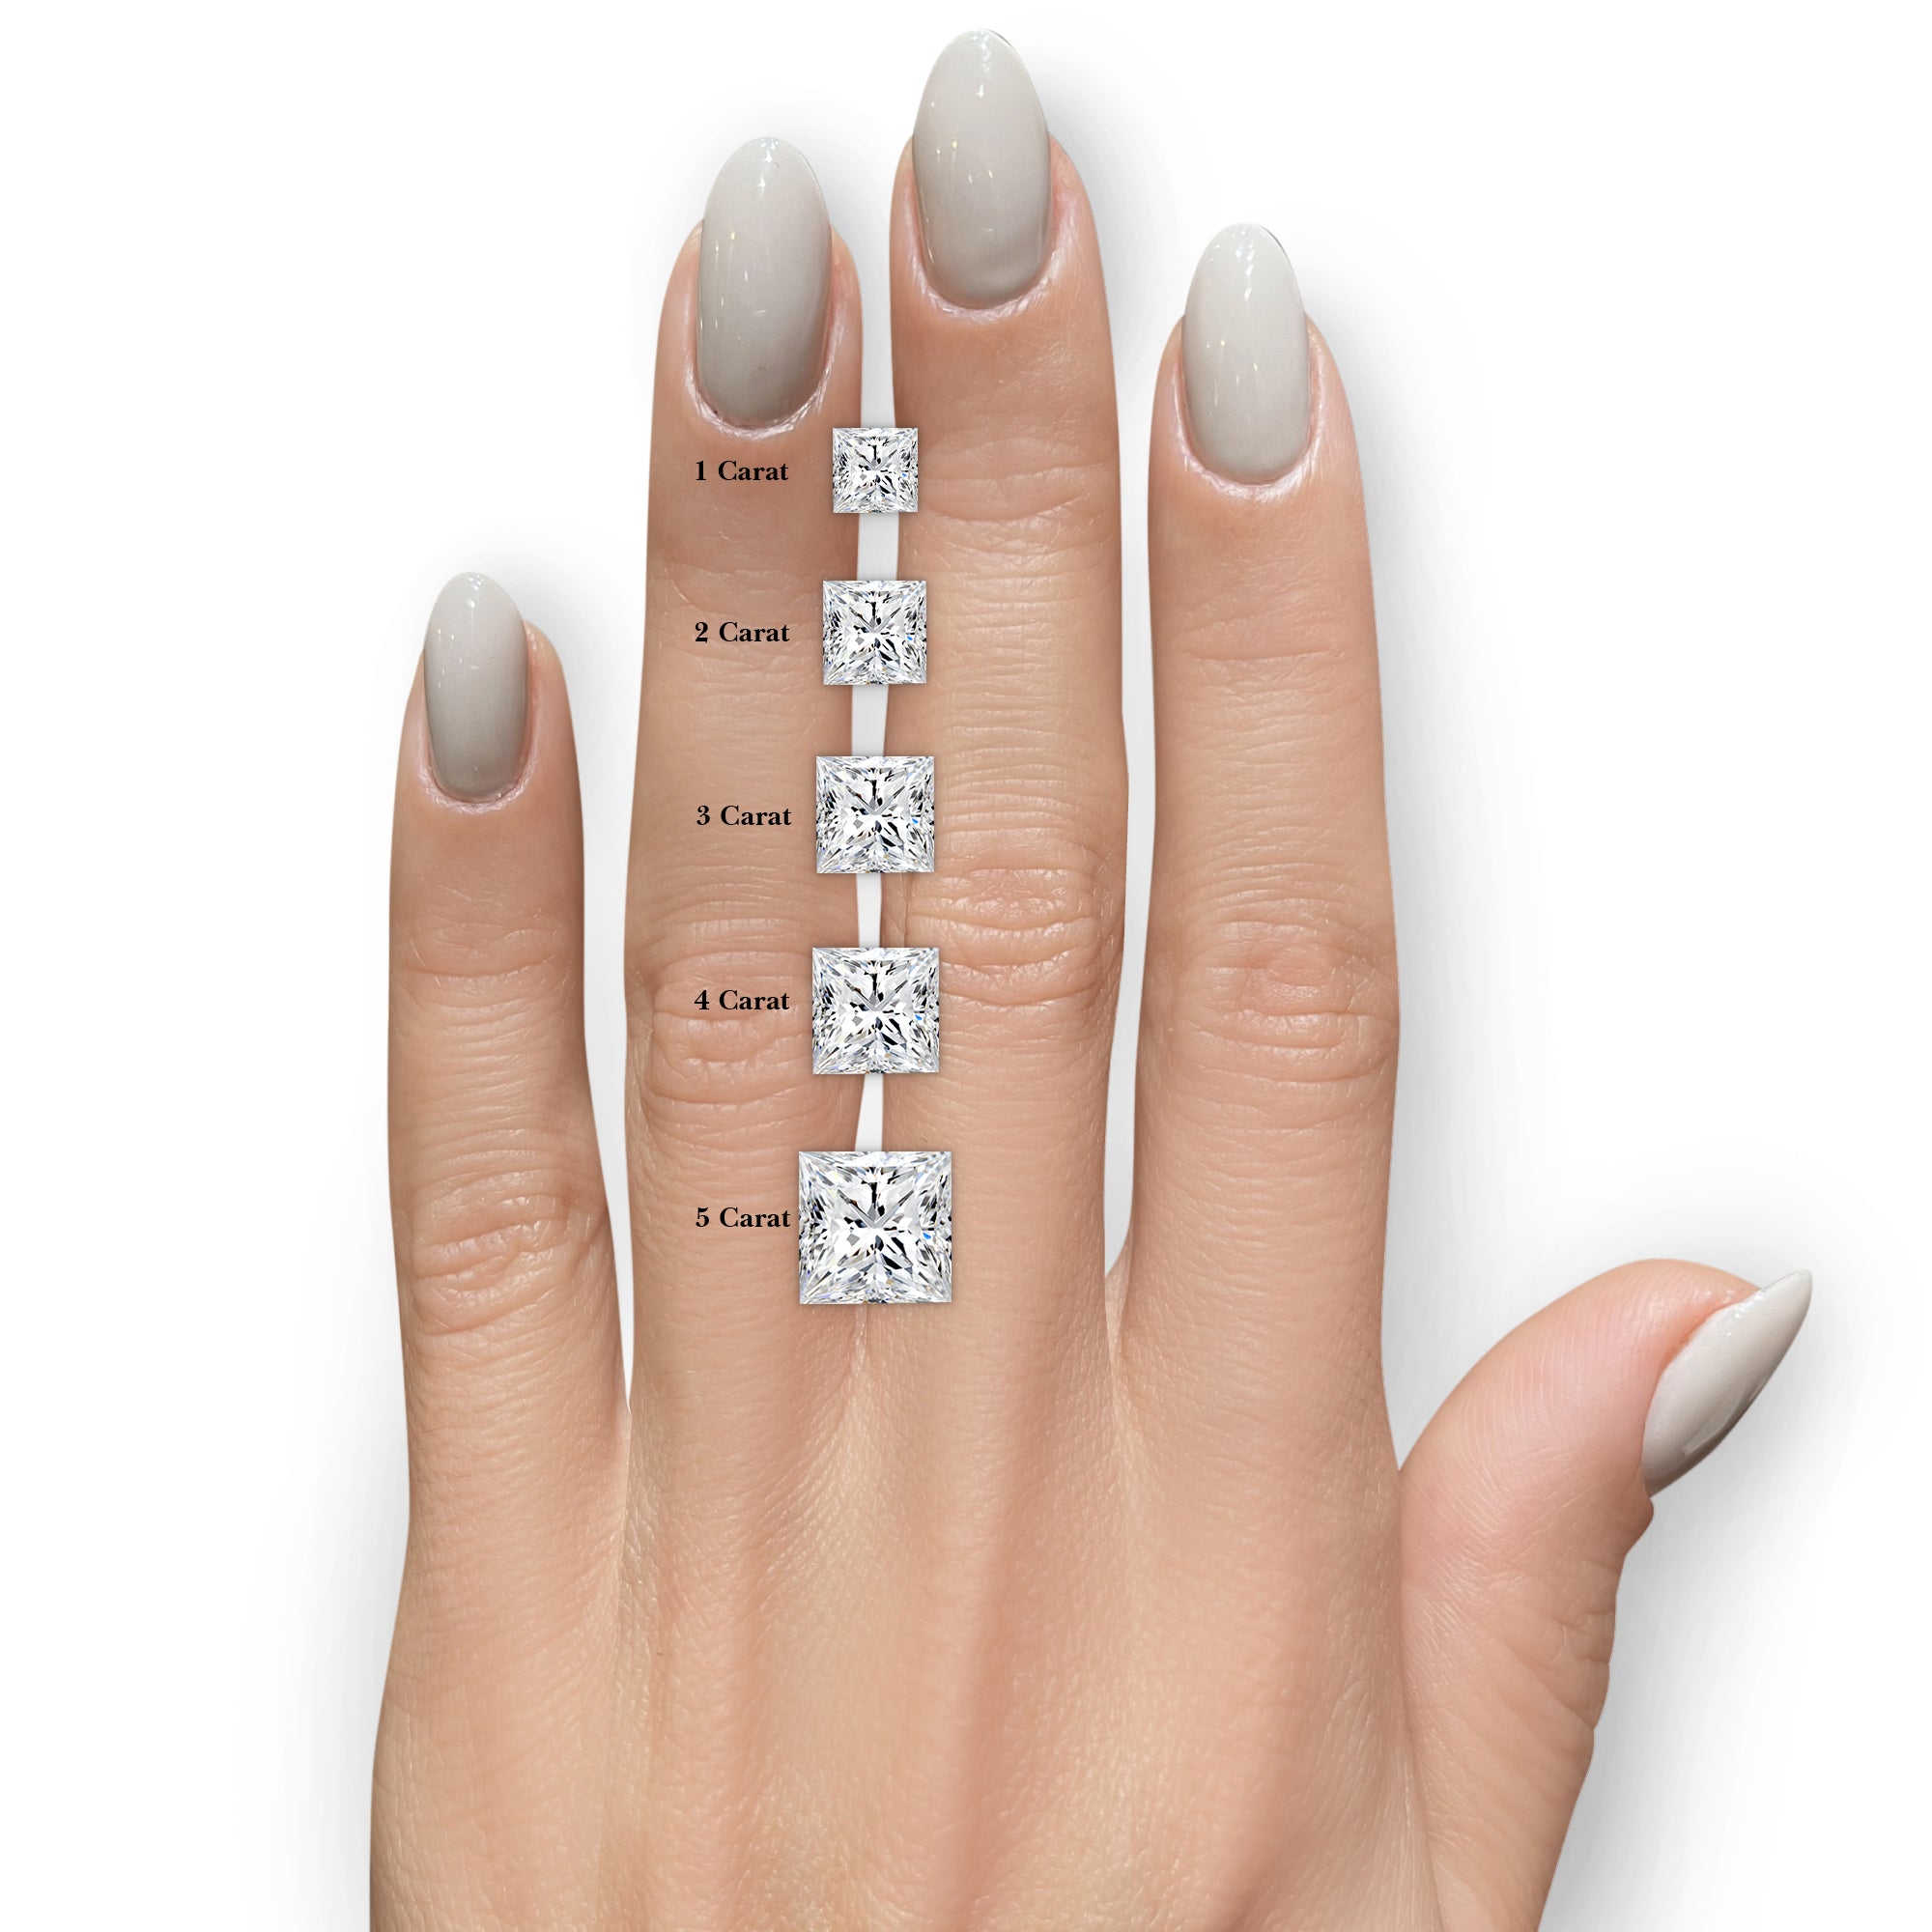 Fiona Lab Grown Diamond Ring -14K White Gold